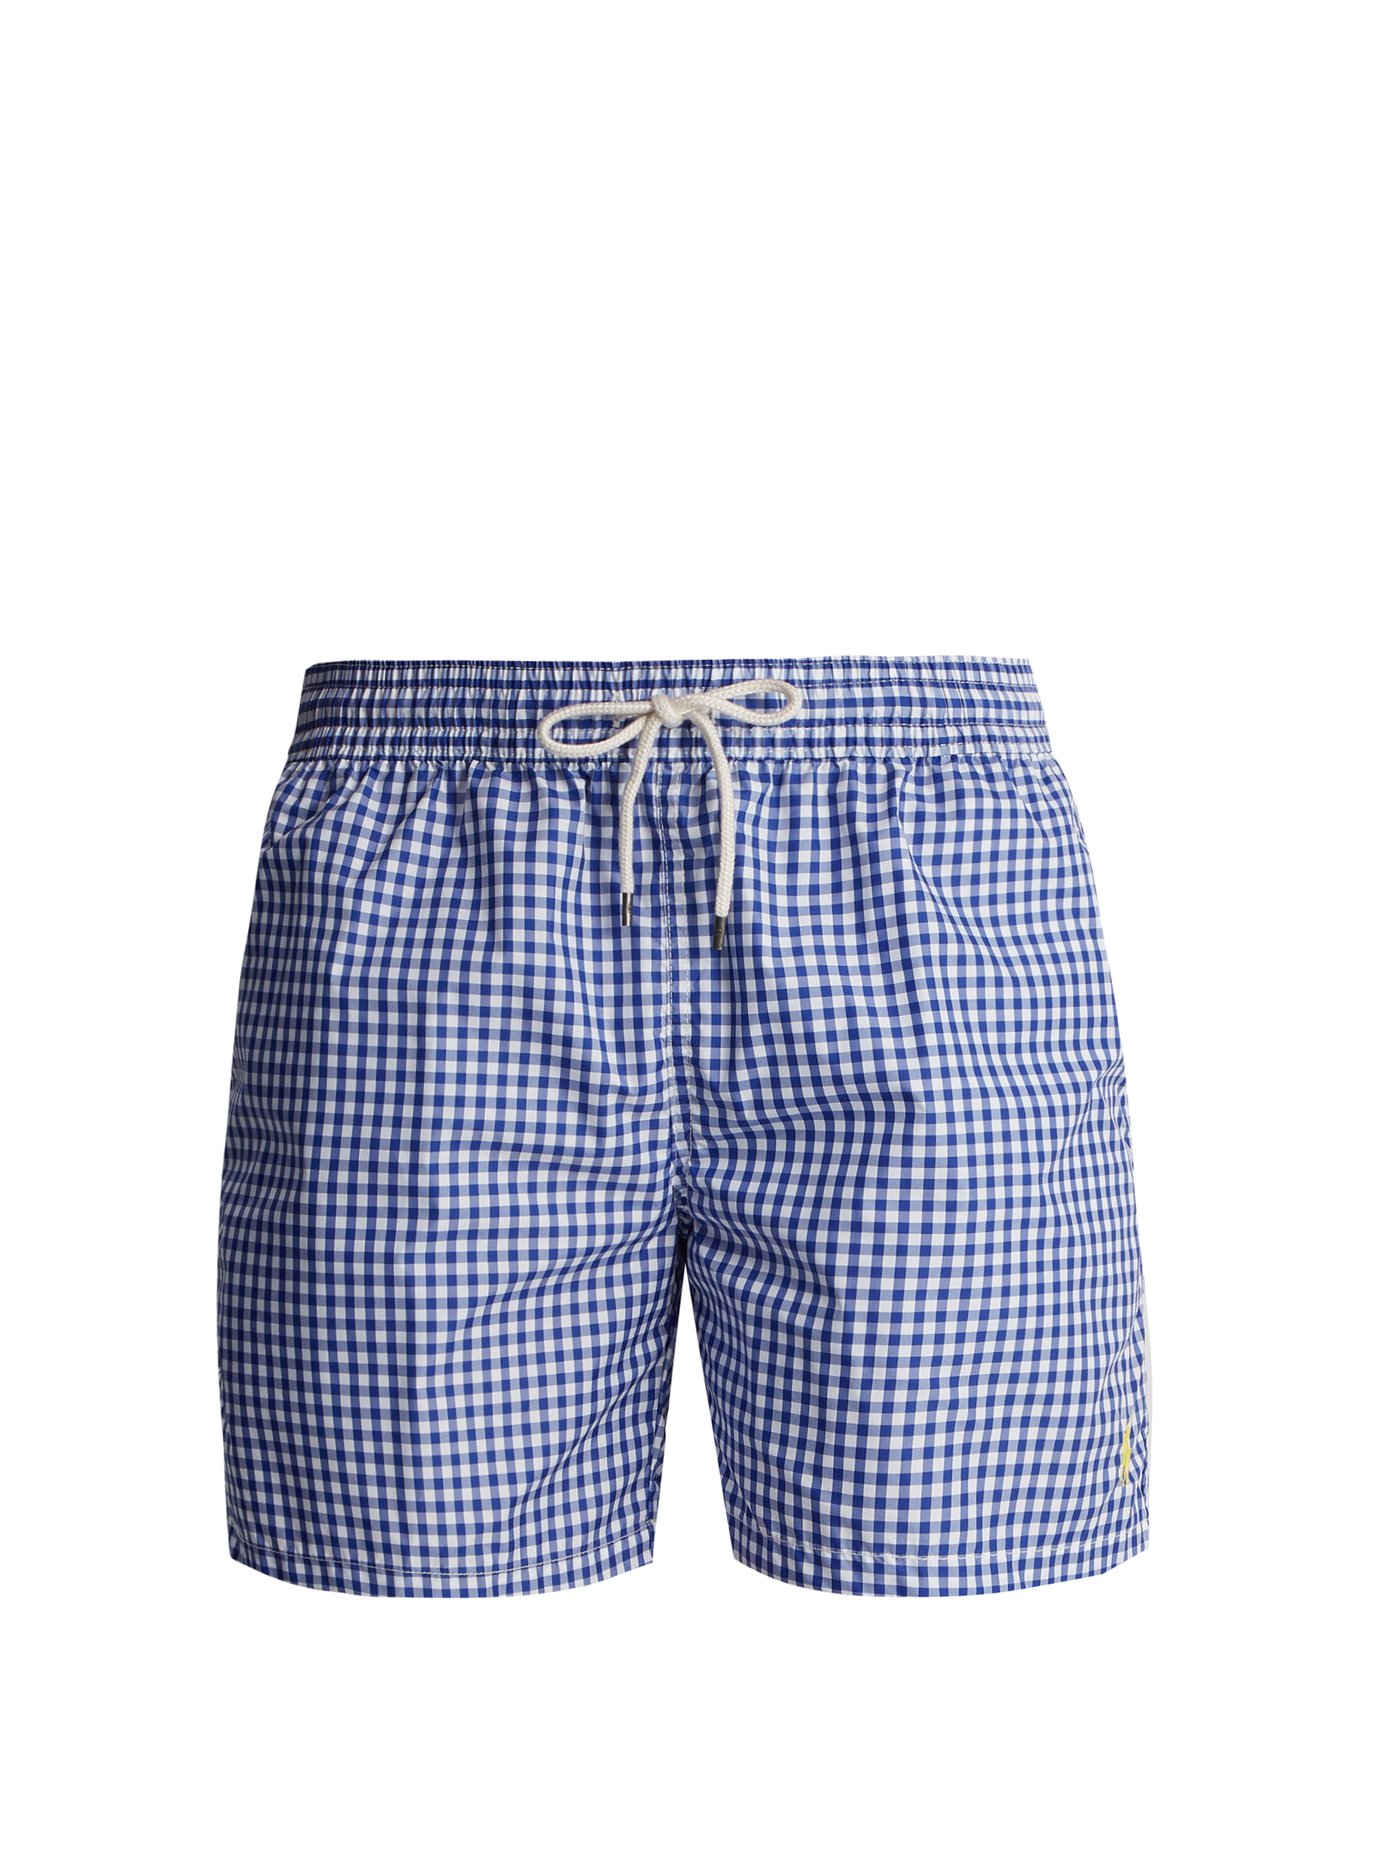 Gingham swim shorts | Polo Ralph Lauren 